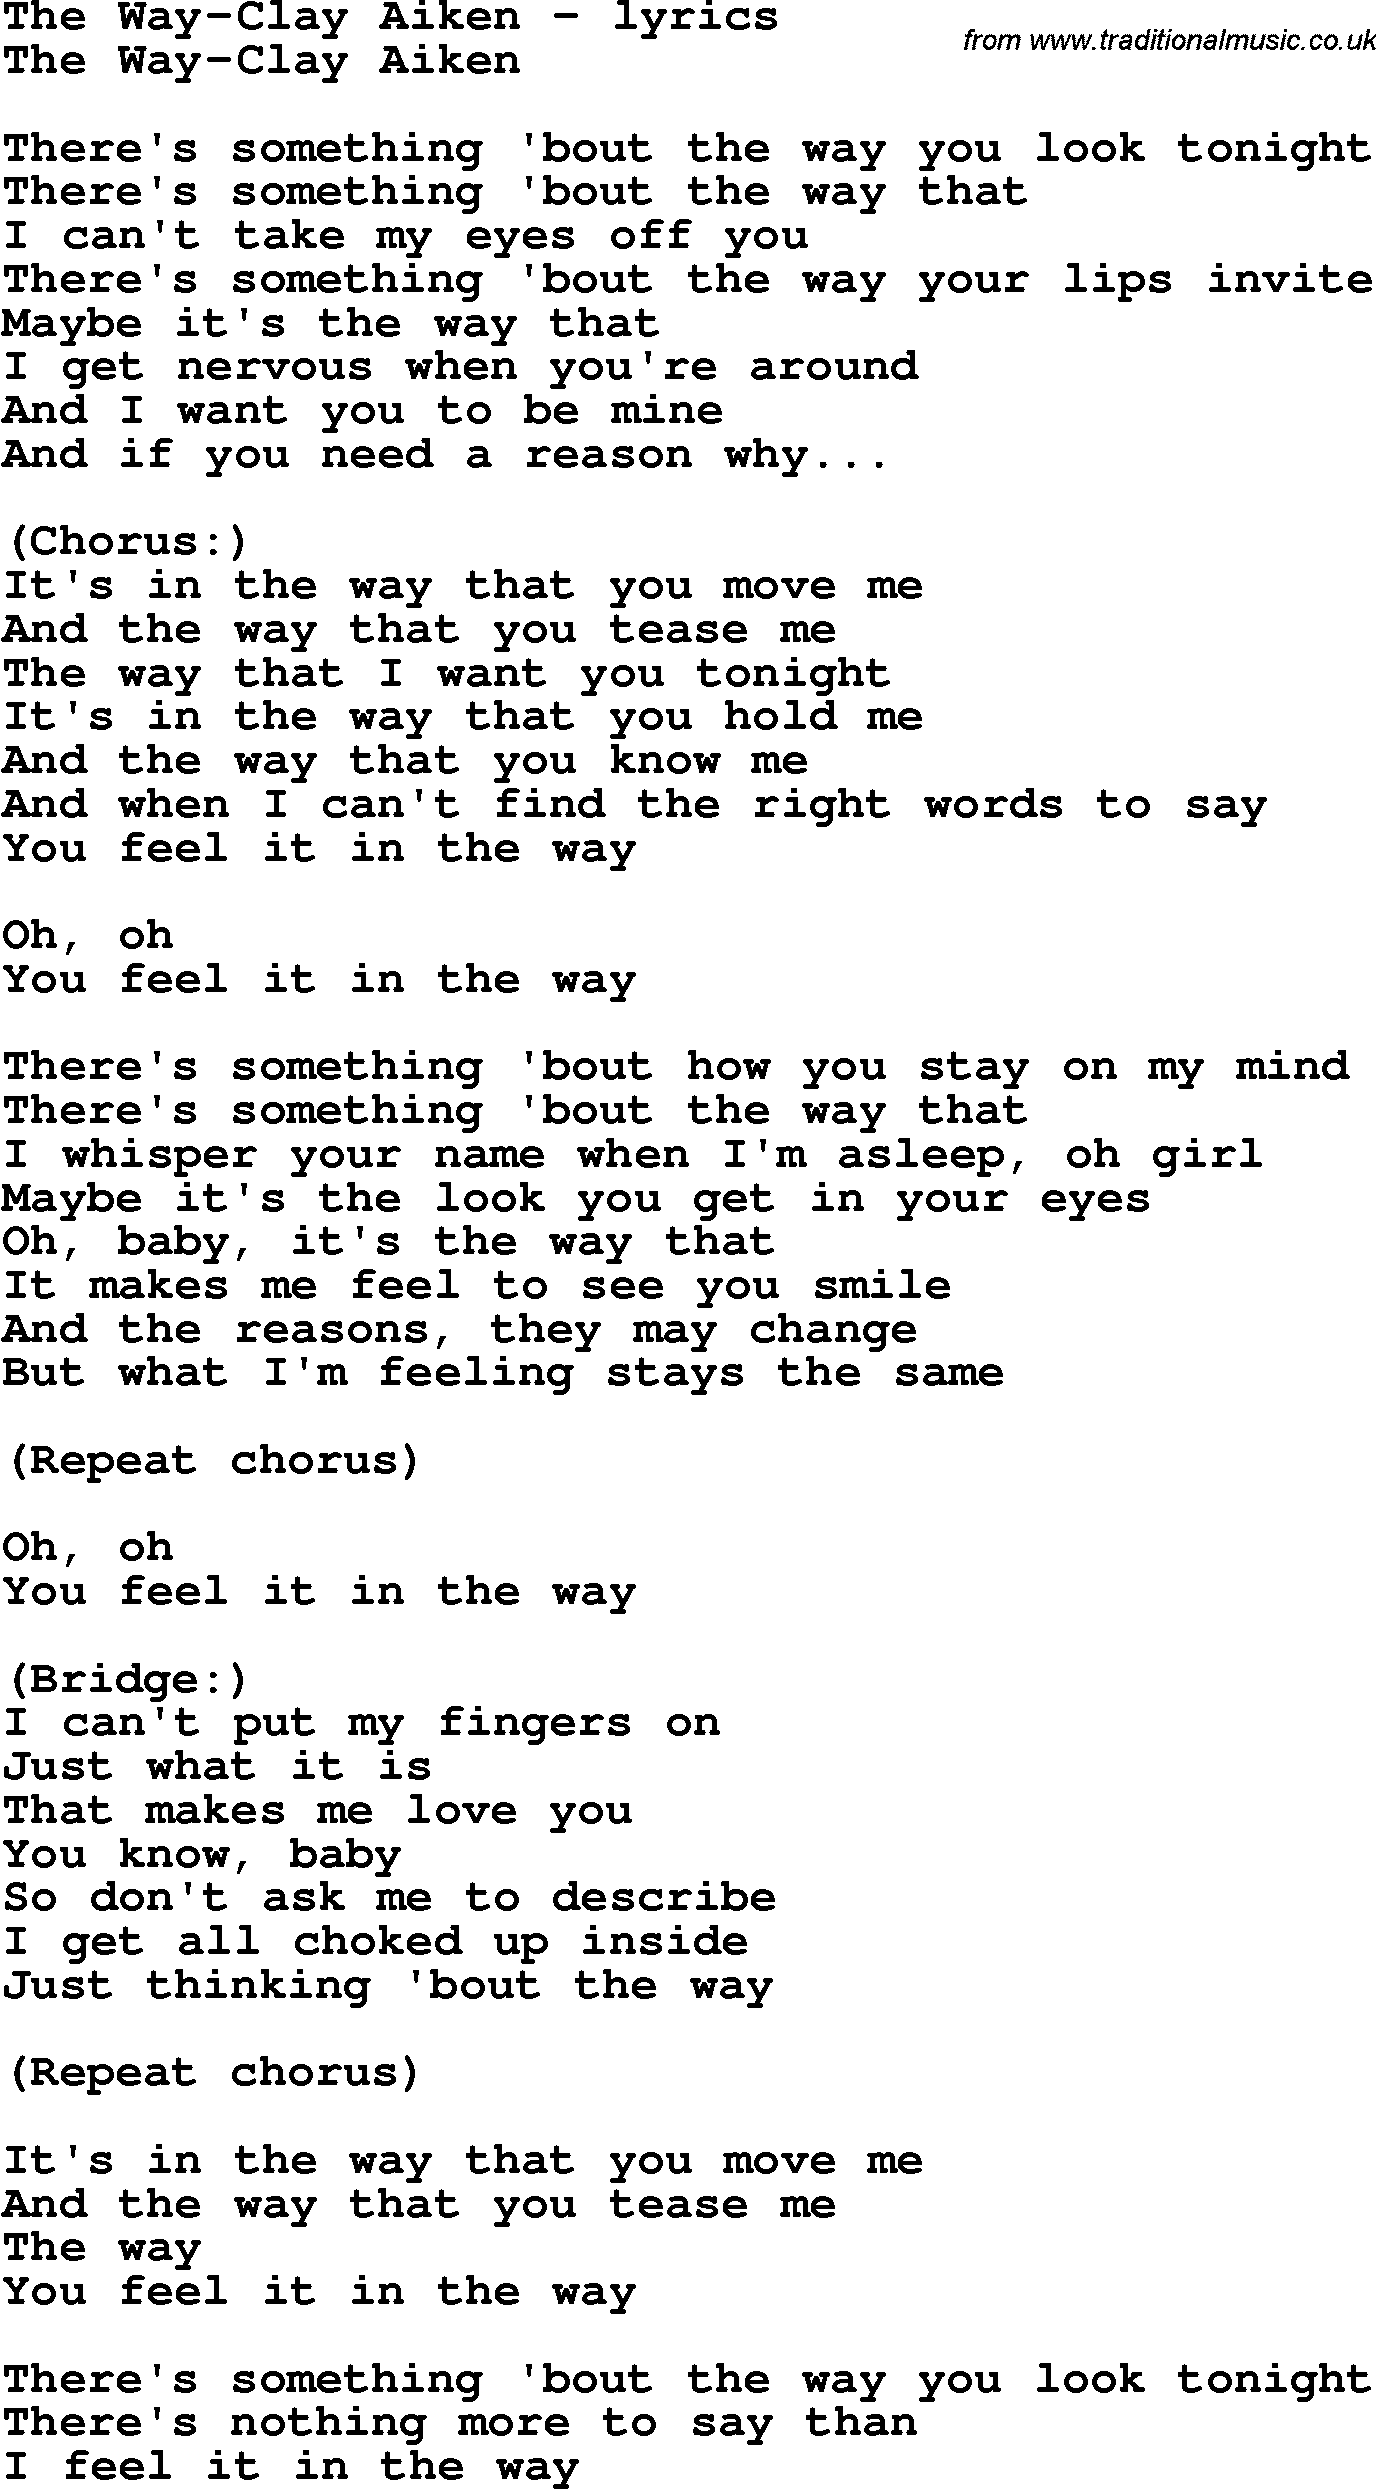 Love Song Lyrics for: The Way-Clay Aiken